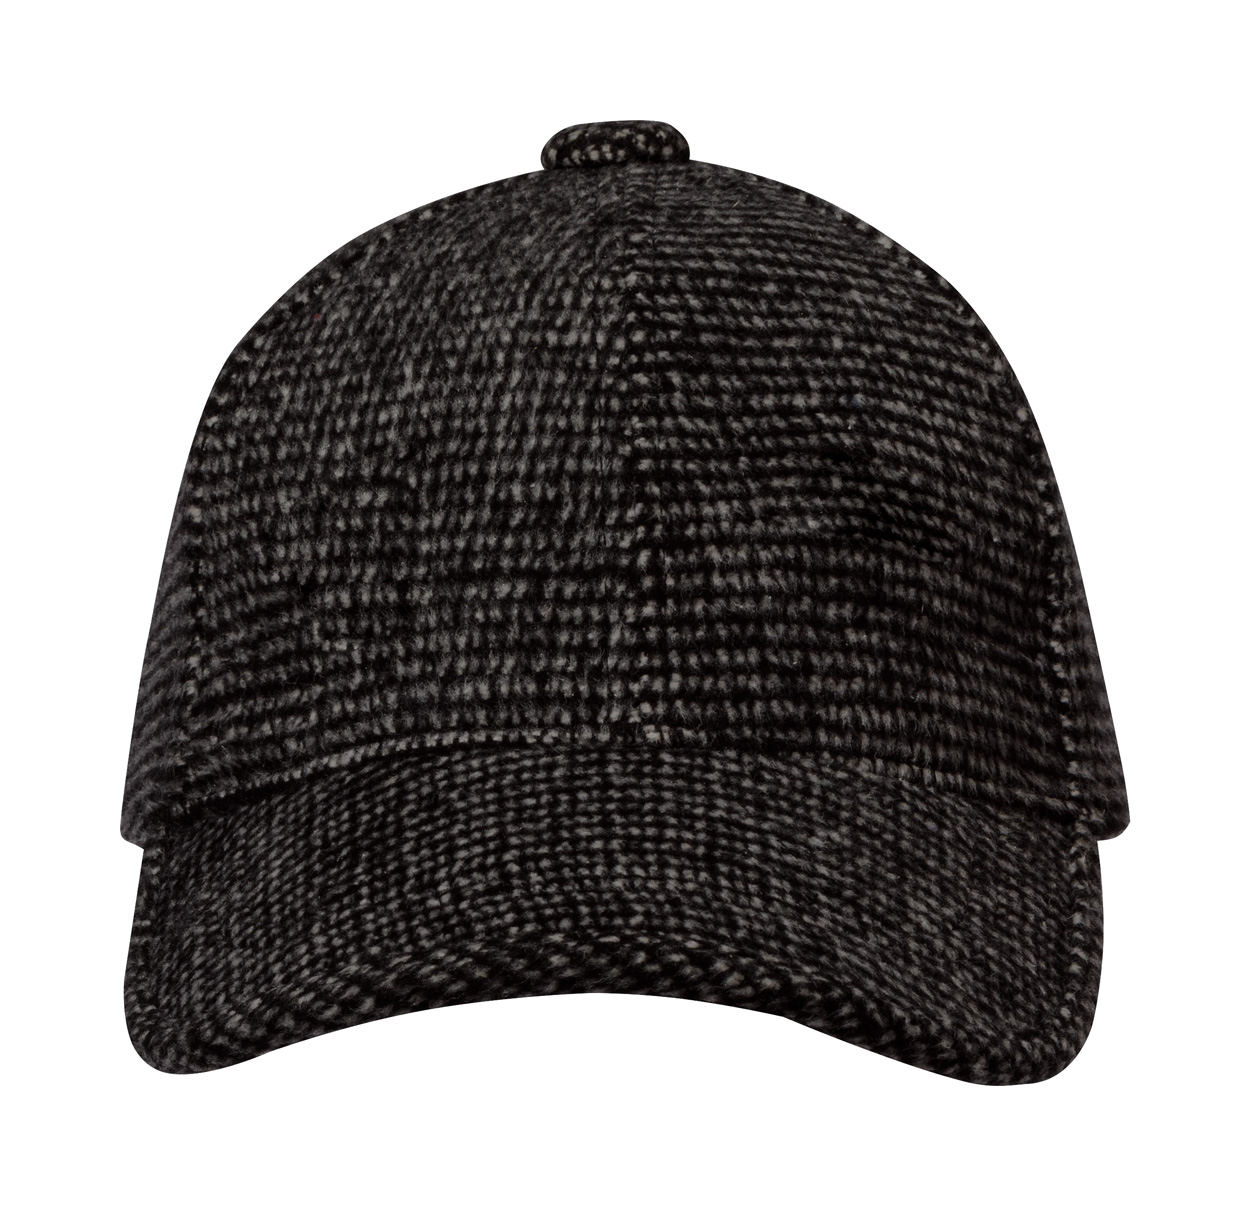 Hats for sale - black